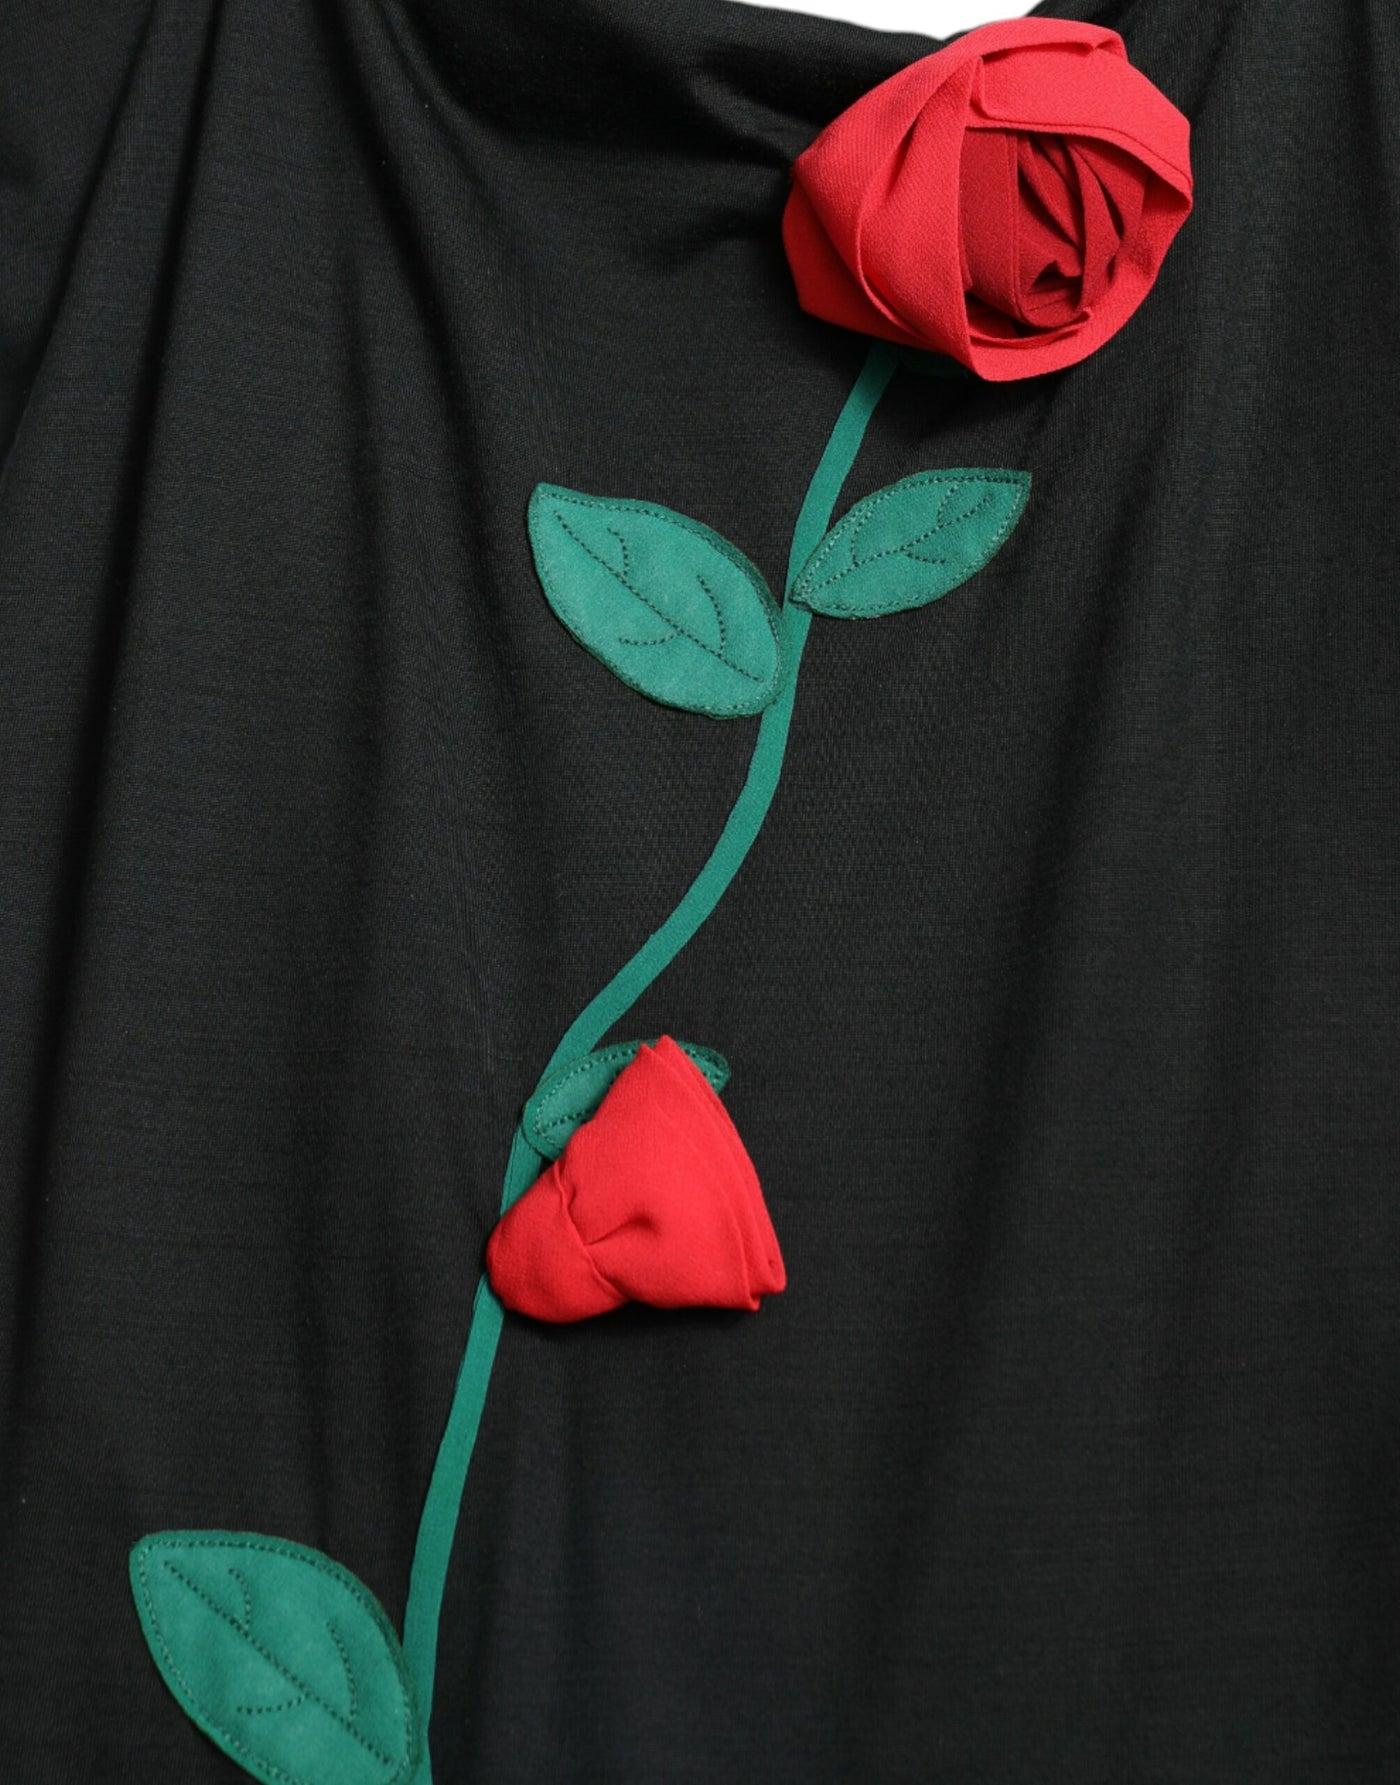 Dolce & Gabbana Black Roses Wool Sheath Bodycon Midi Dress